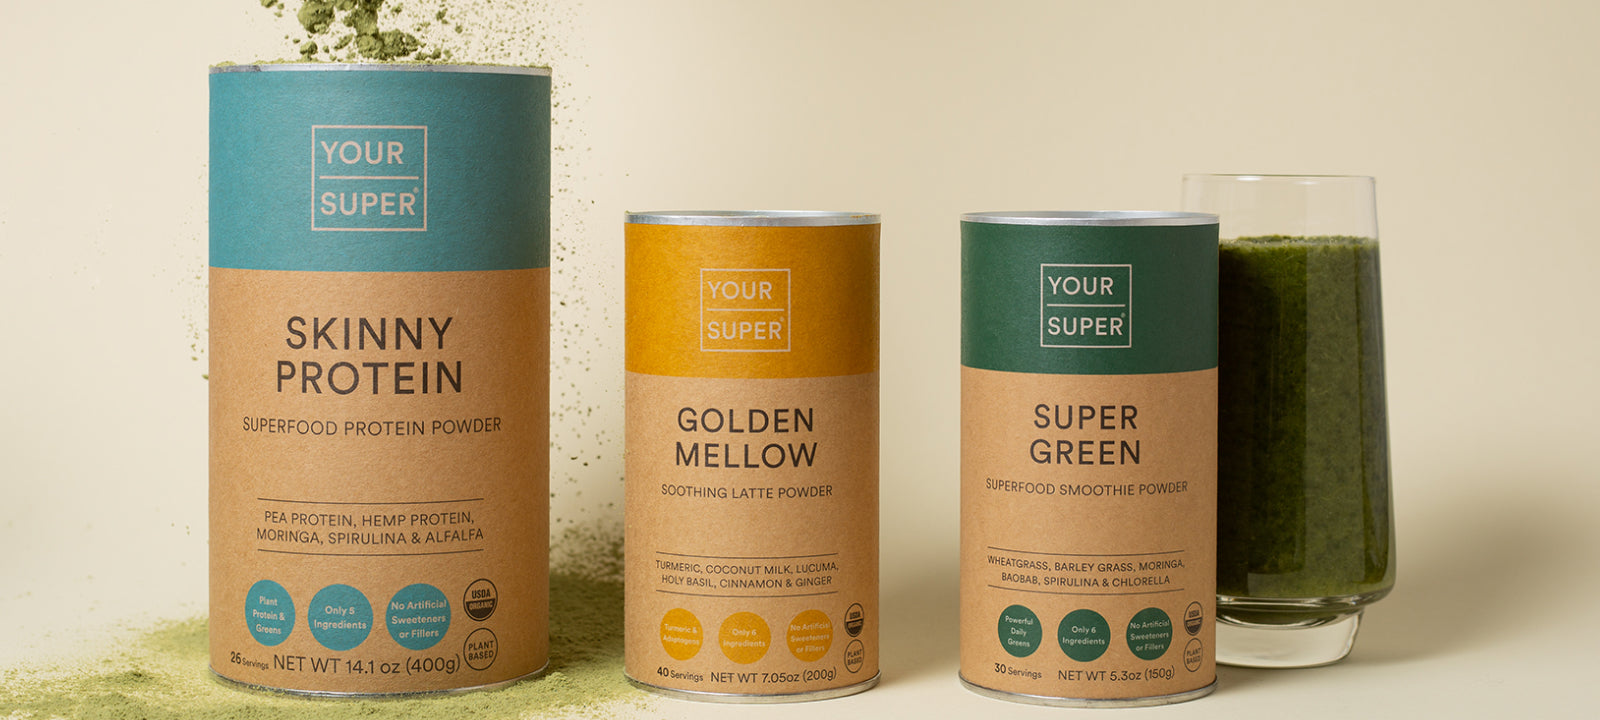 Skinny Protein, Golden Mellow, Super Green